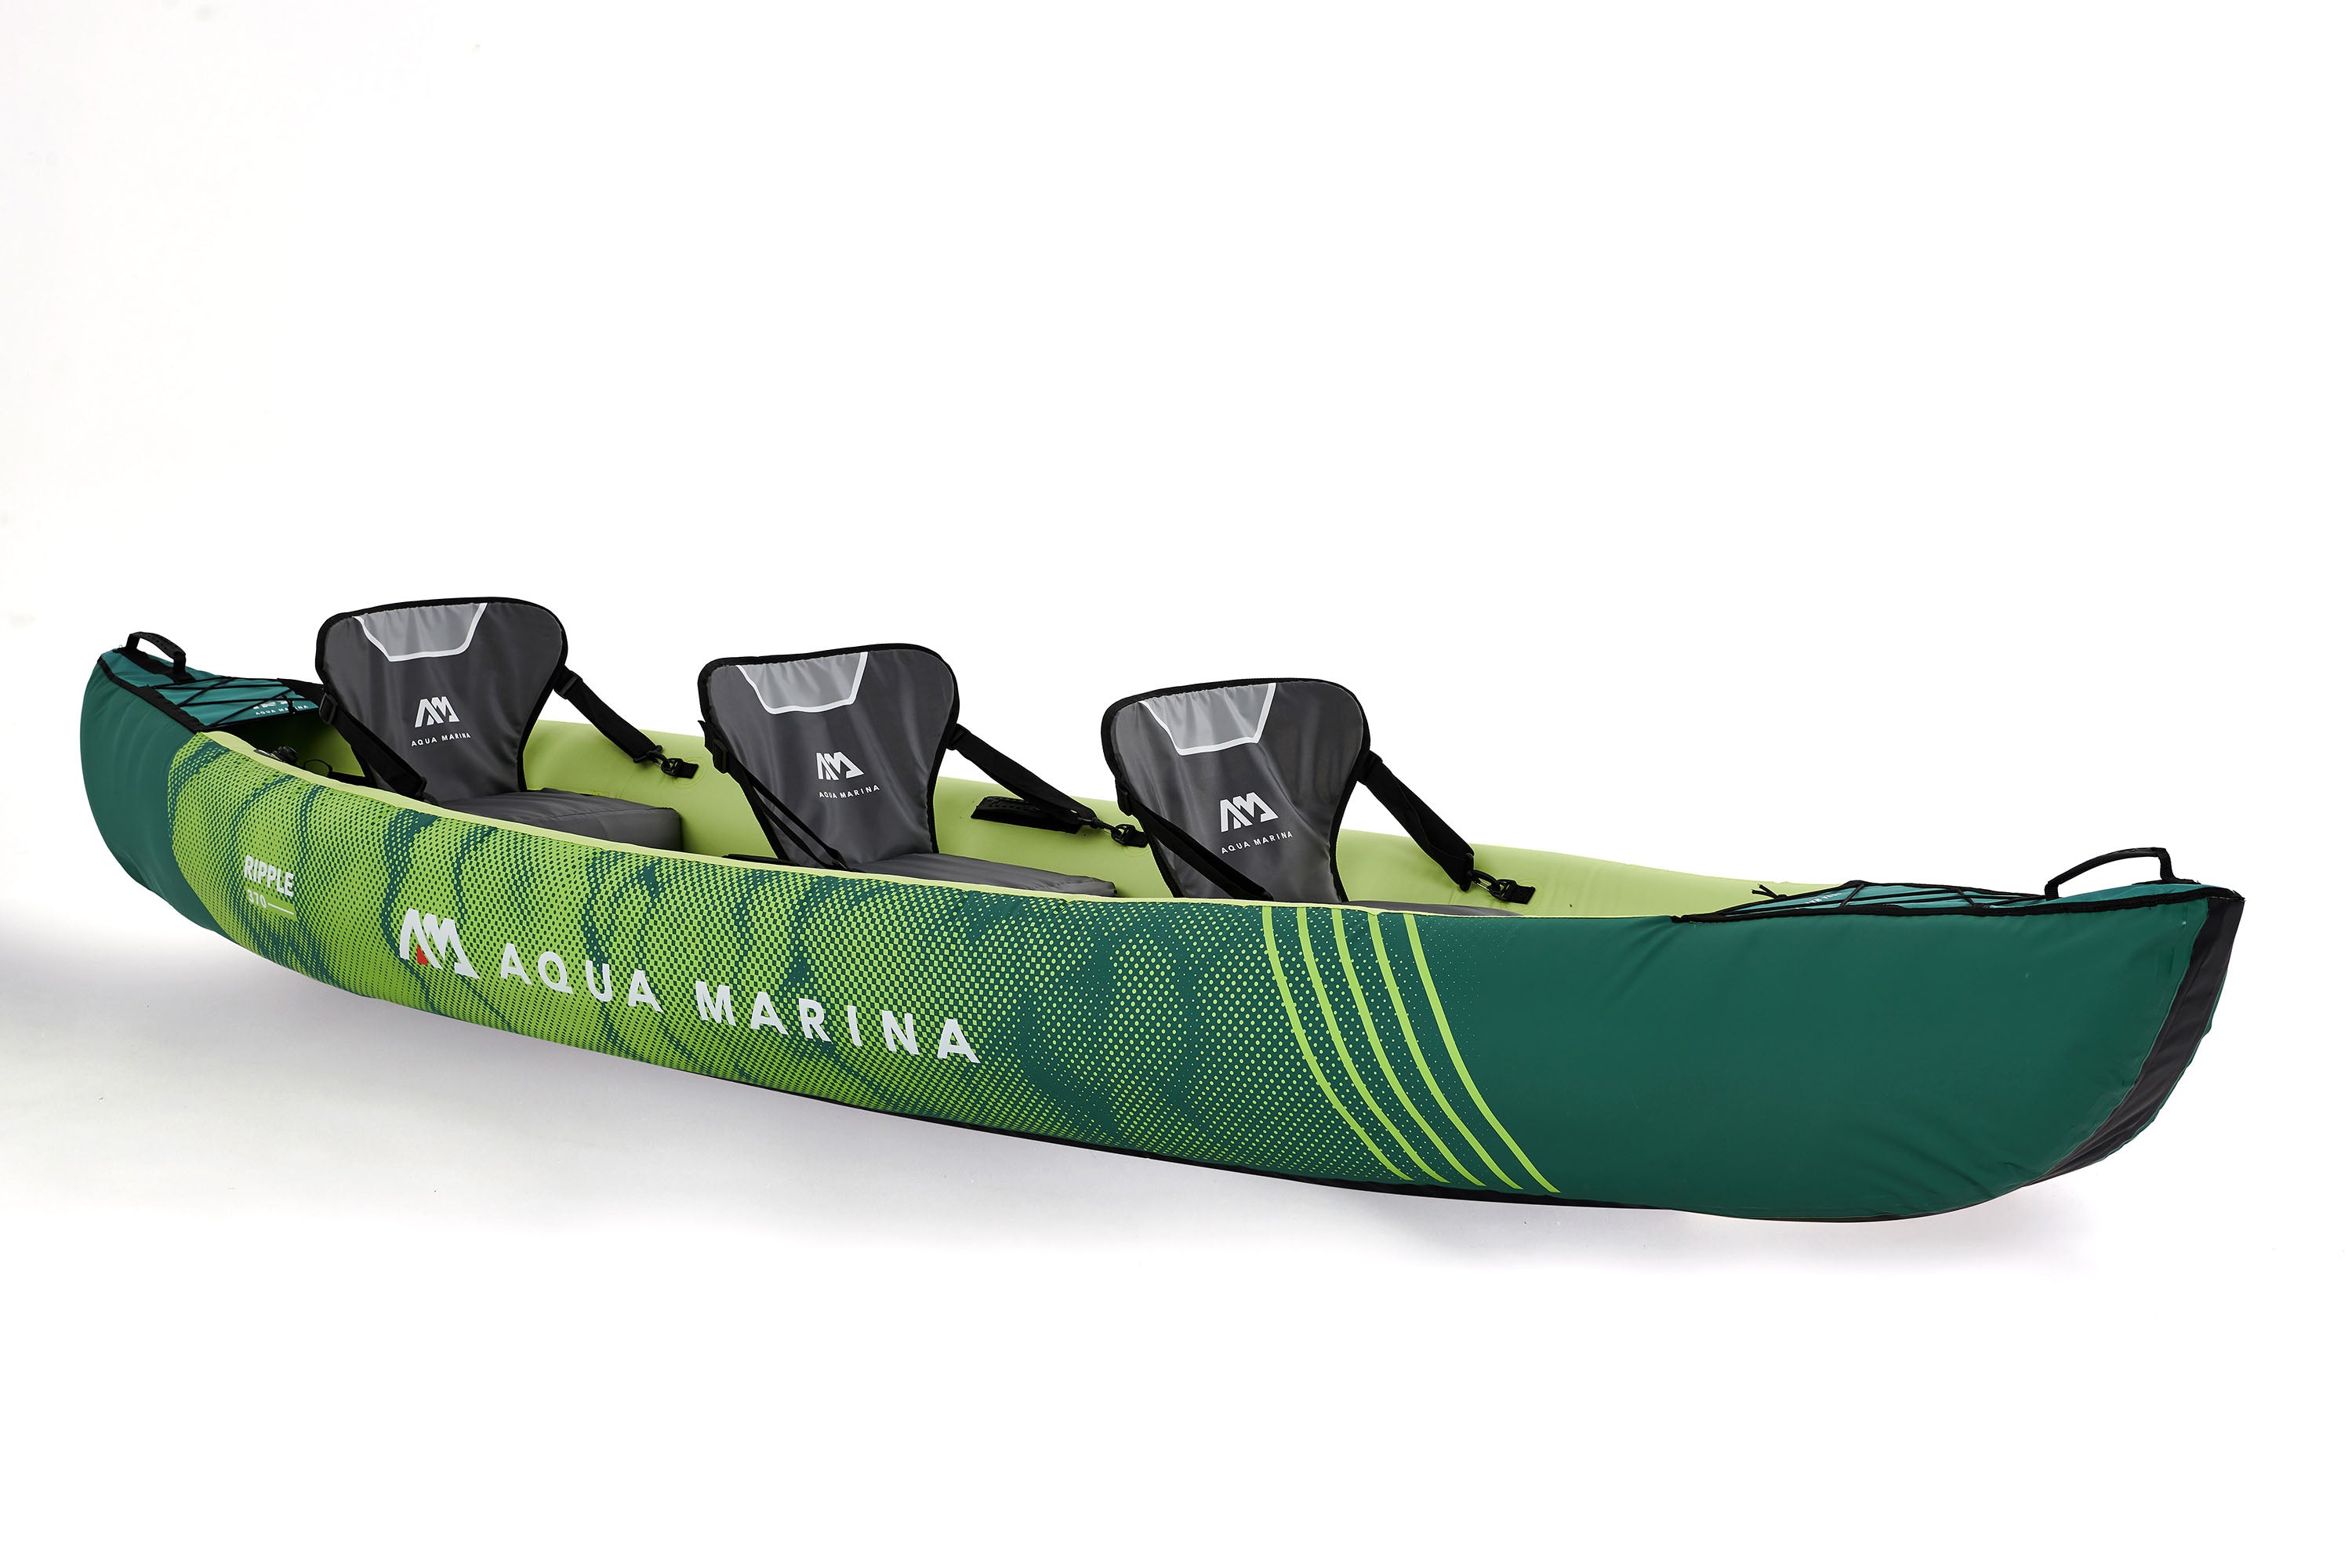 AQUA MARINA Ripple-370 Recreational Canoe 3 Person Inflatable Deck 2 In 1 Canoe & Kayak Convertible Paddle Set X2. Canoe Seat X3